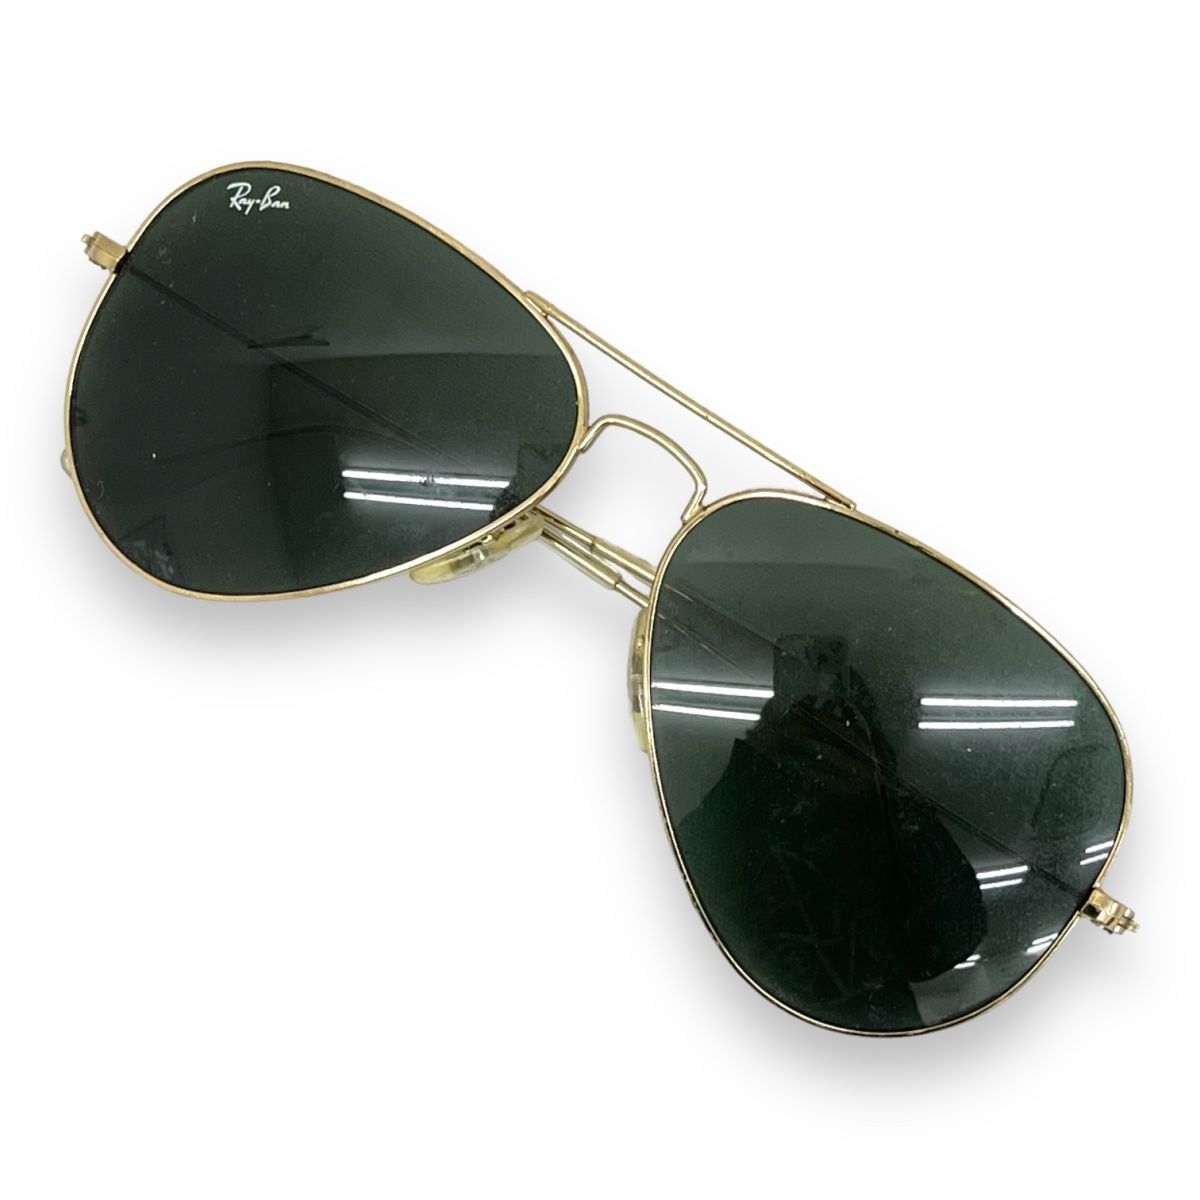 Ray-Ban RayBan sunglasses glasses I wear fashion brand Teardrop RB3025 aviator AVIATOR green case attaching 